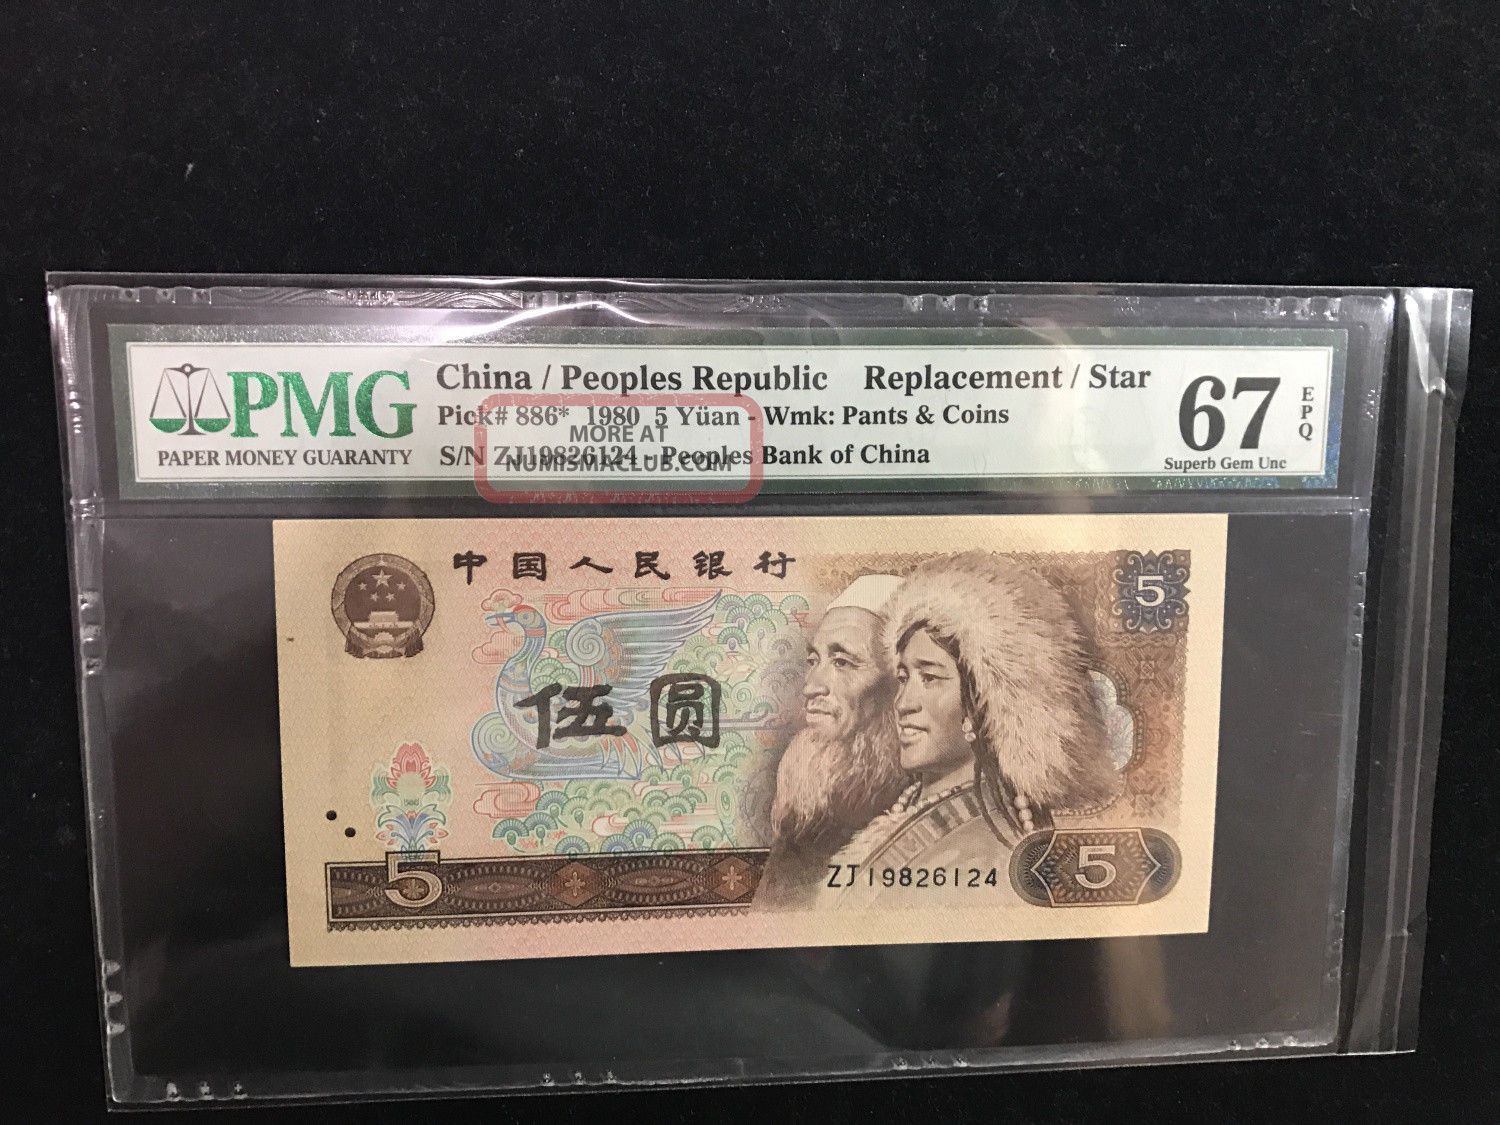 China,  1980,  5 Yuan,  P 886,  Replacement,  Zj - - Pmg,  Unc,  67e,  Rare Asia photo